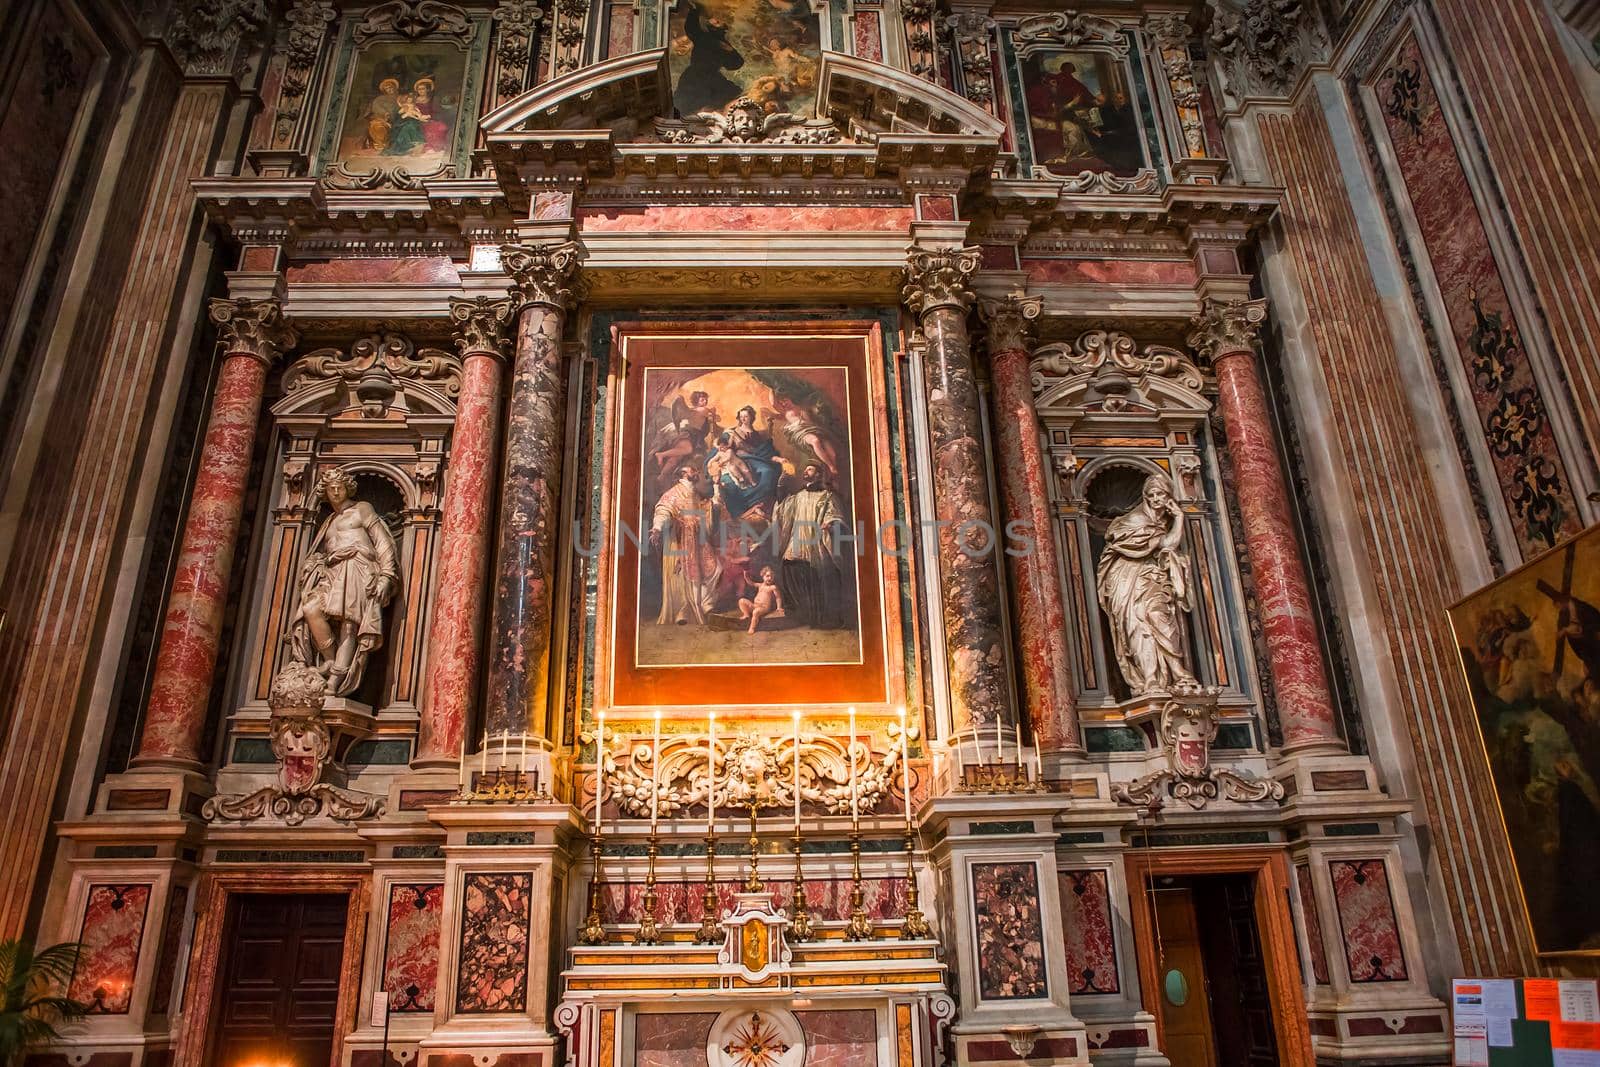 Barroco church of the Gesu Nuovo, Naples, Italy by photogolfer